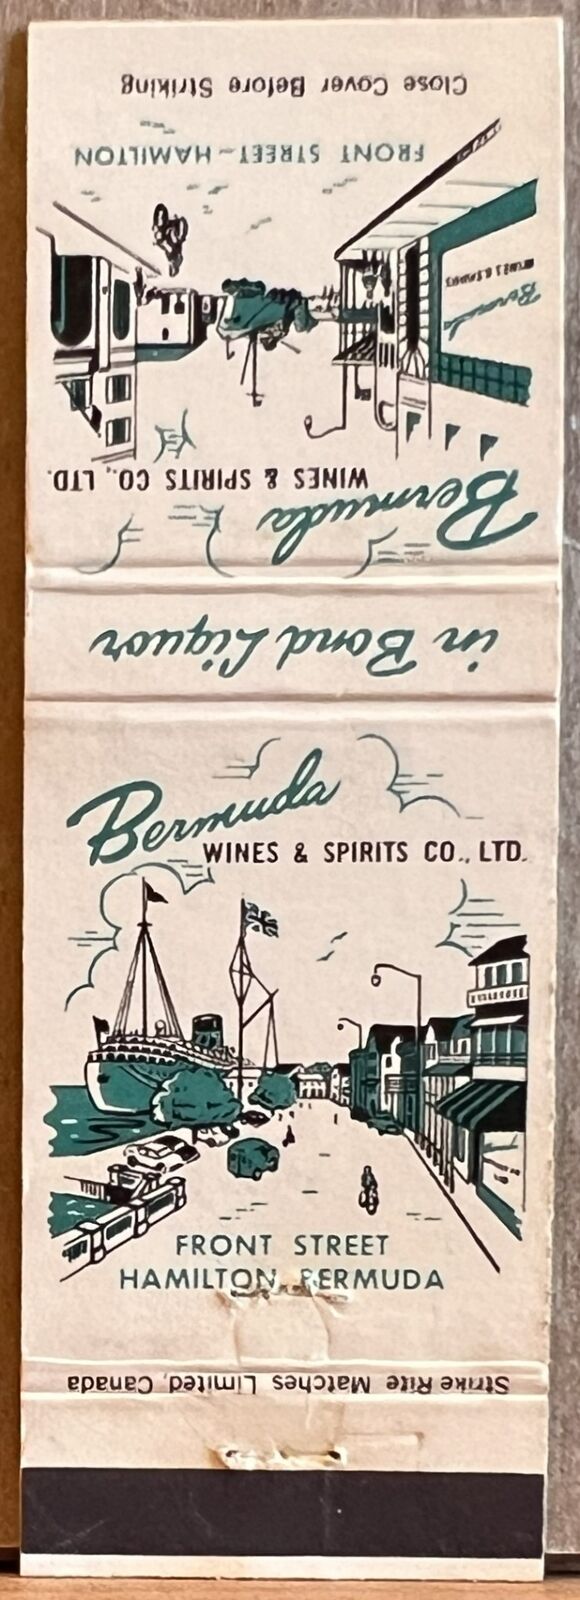 Bermuda Wines & Spirits Co LTD Hamilton Bermuda Vintage Matchbook Cover